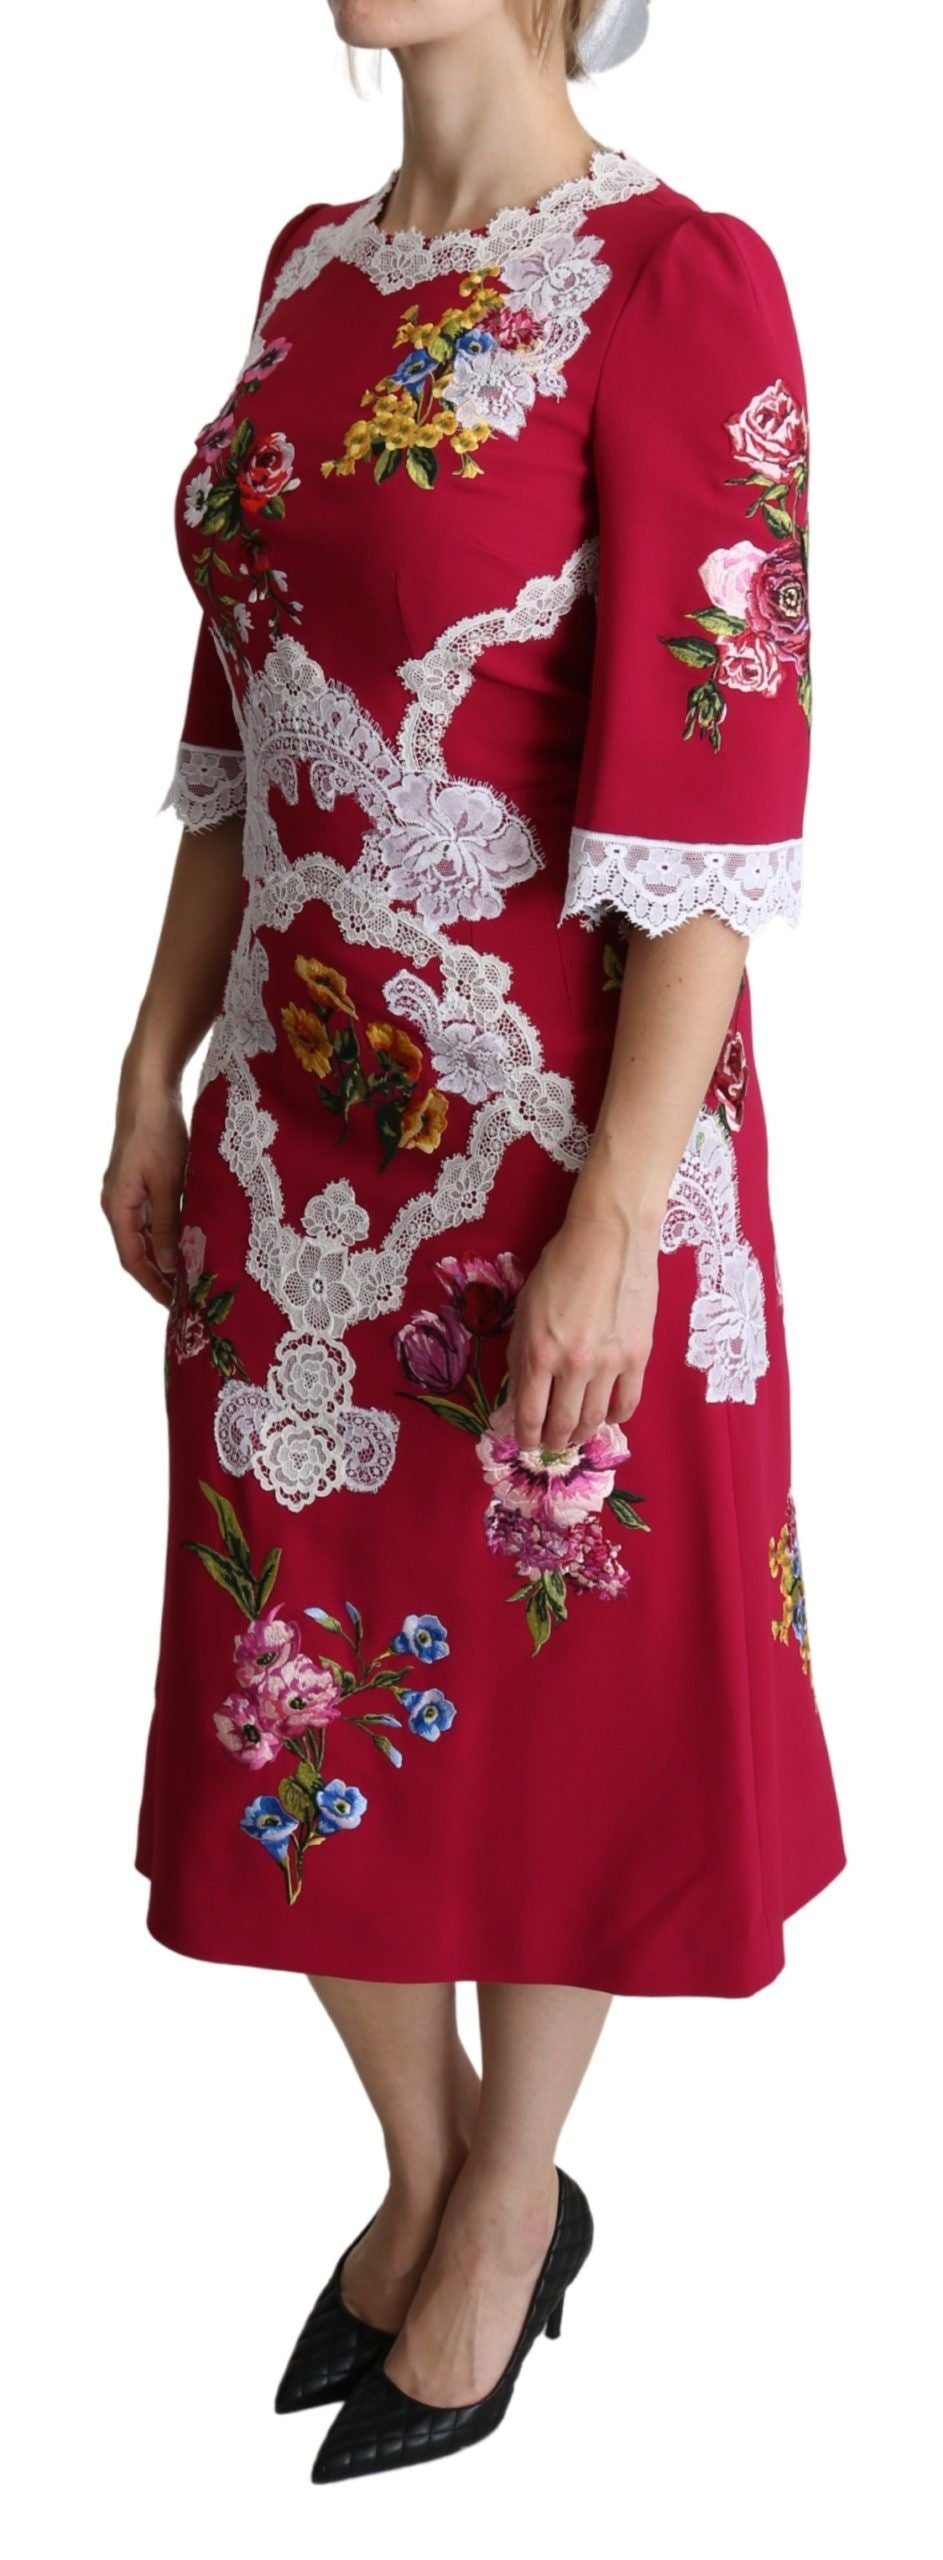 Floral Embroidered Sheath Midi Dress